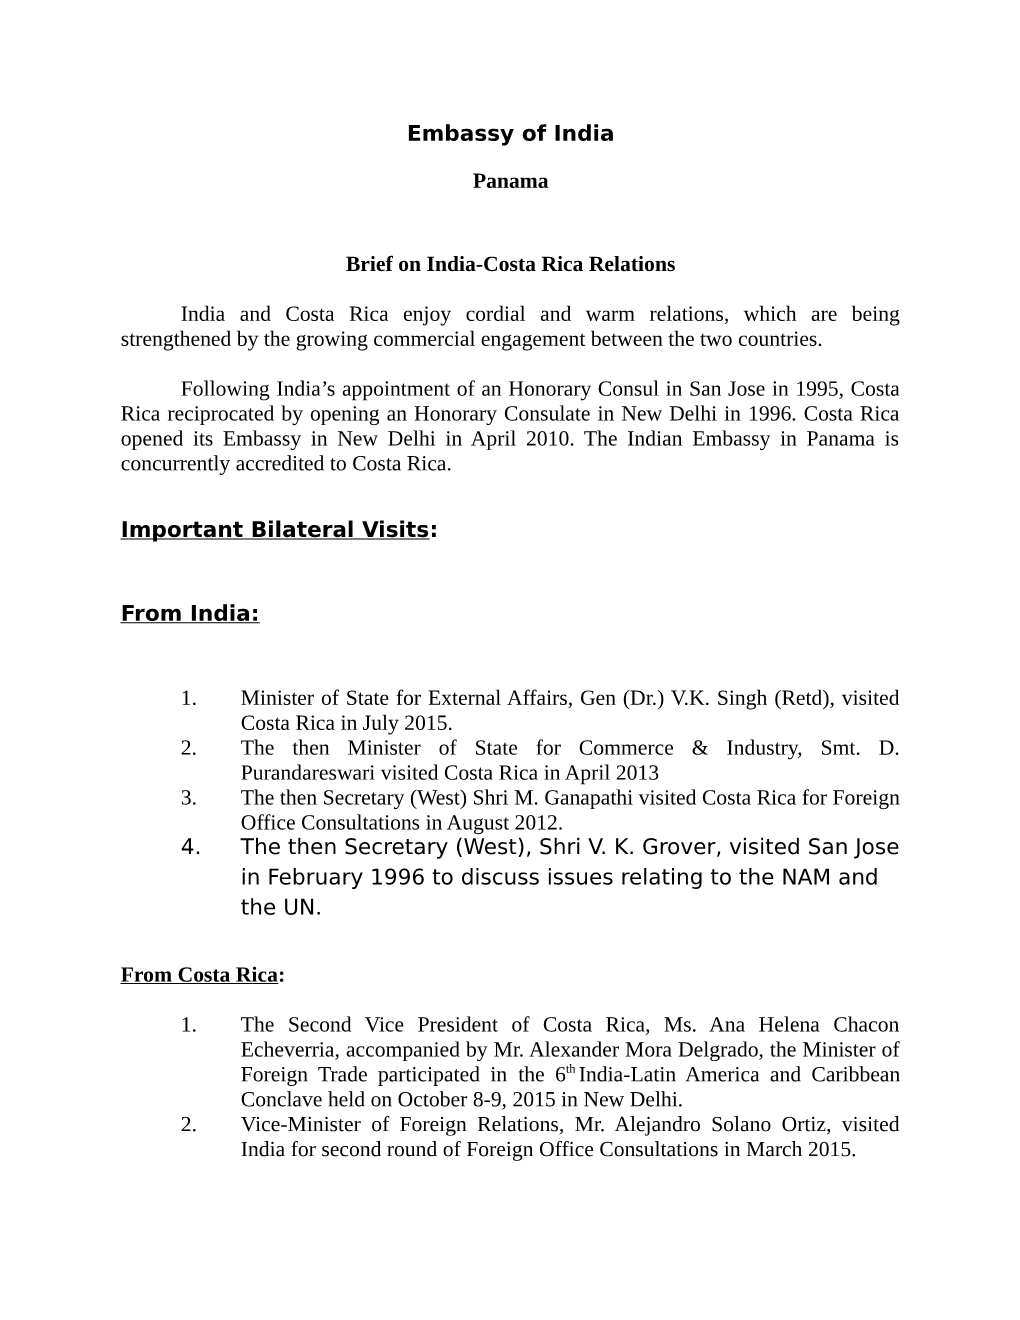 Embassy of India Panama Brief on India-Costa Rica Relations India